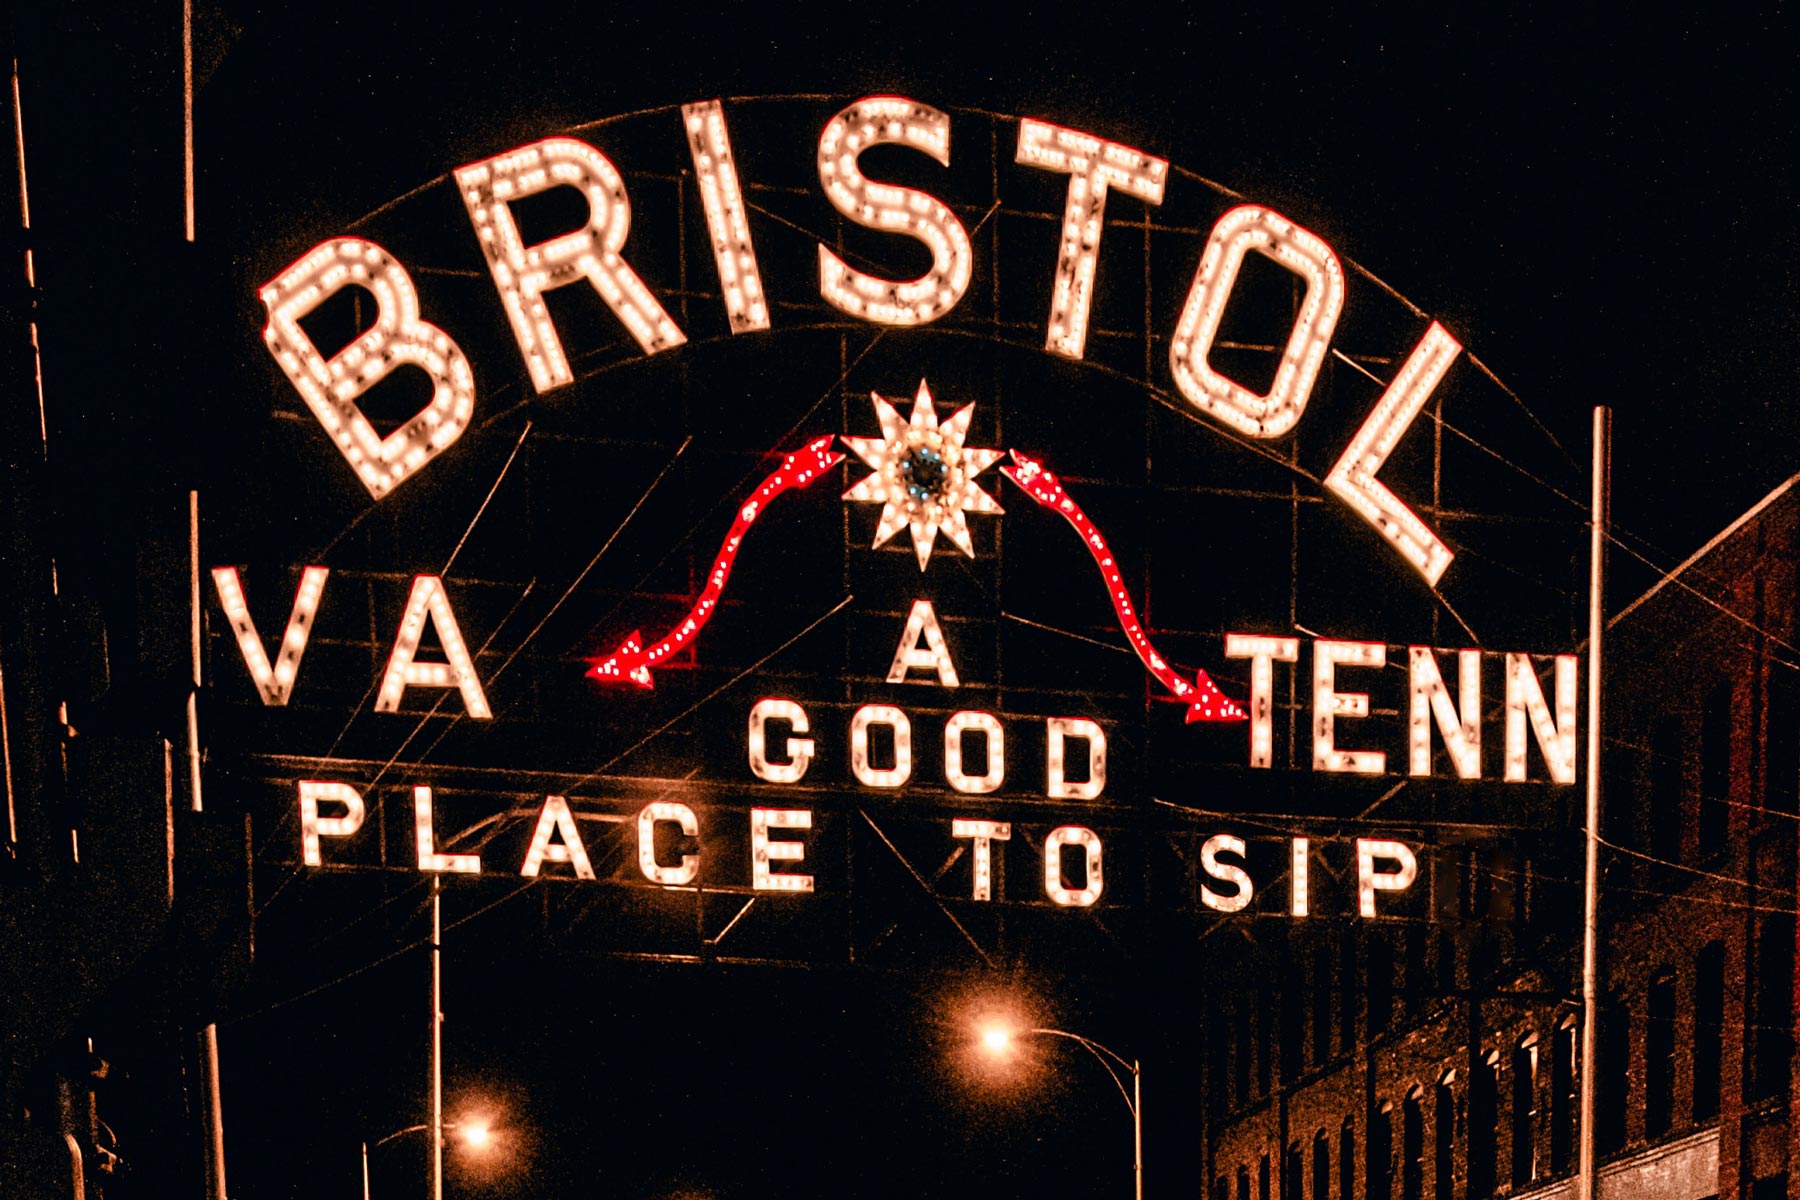 Bristol Tenn sign